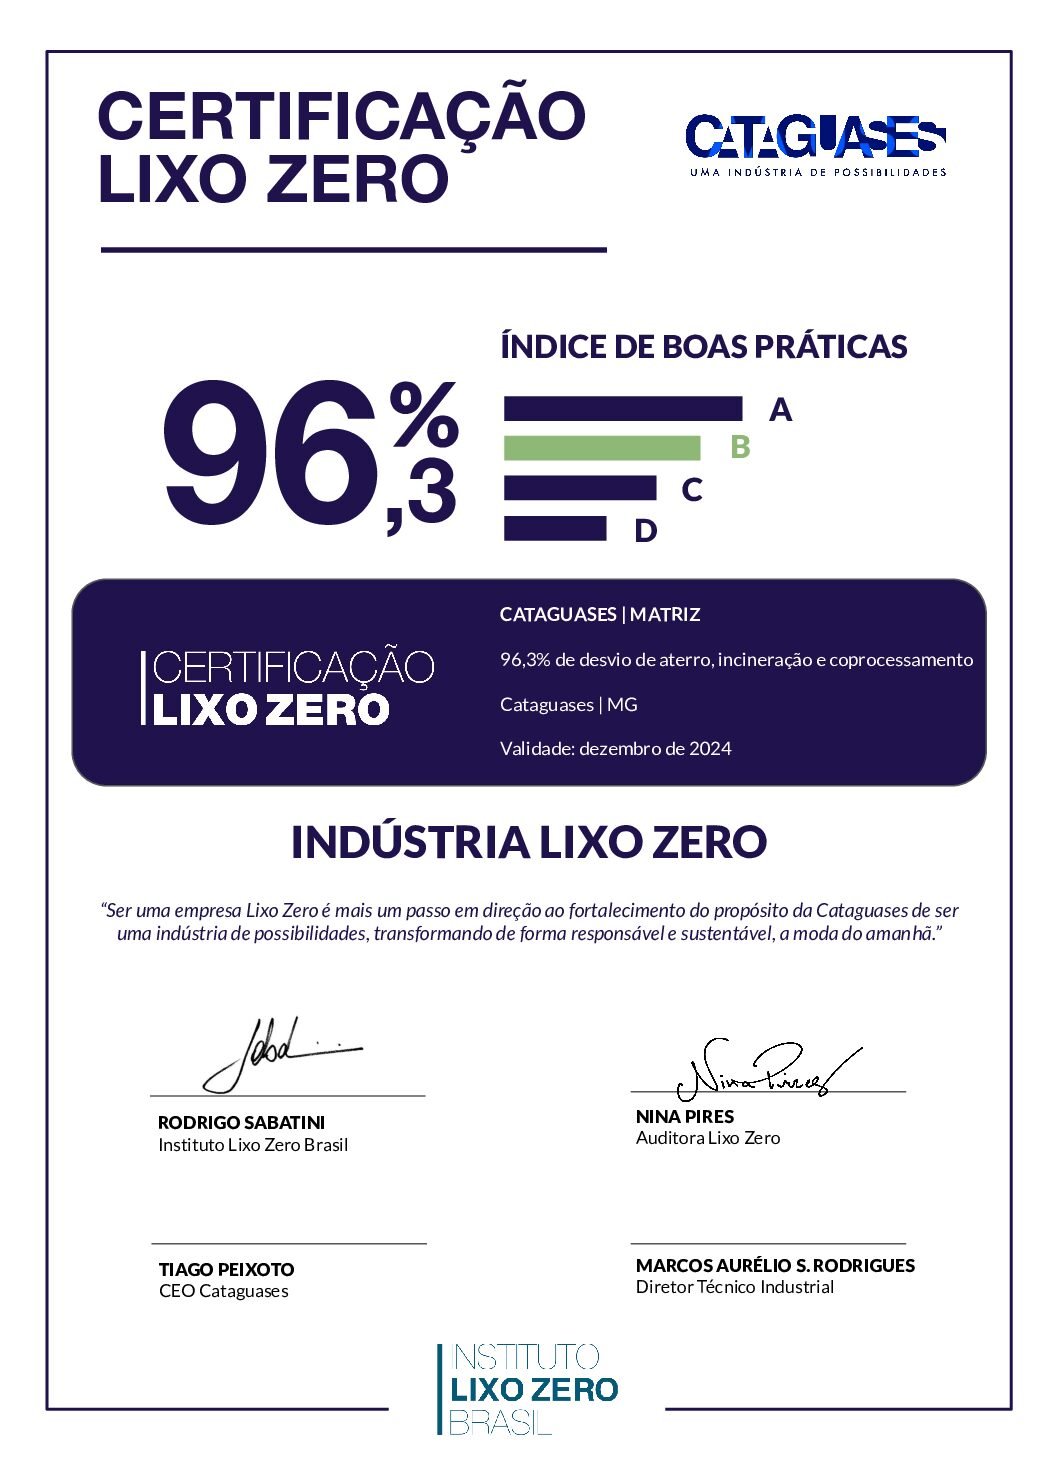 CertificaçãoLixoZero_Cataguases_Matriz_MG_Dezembro_2023